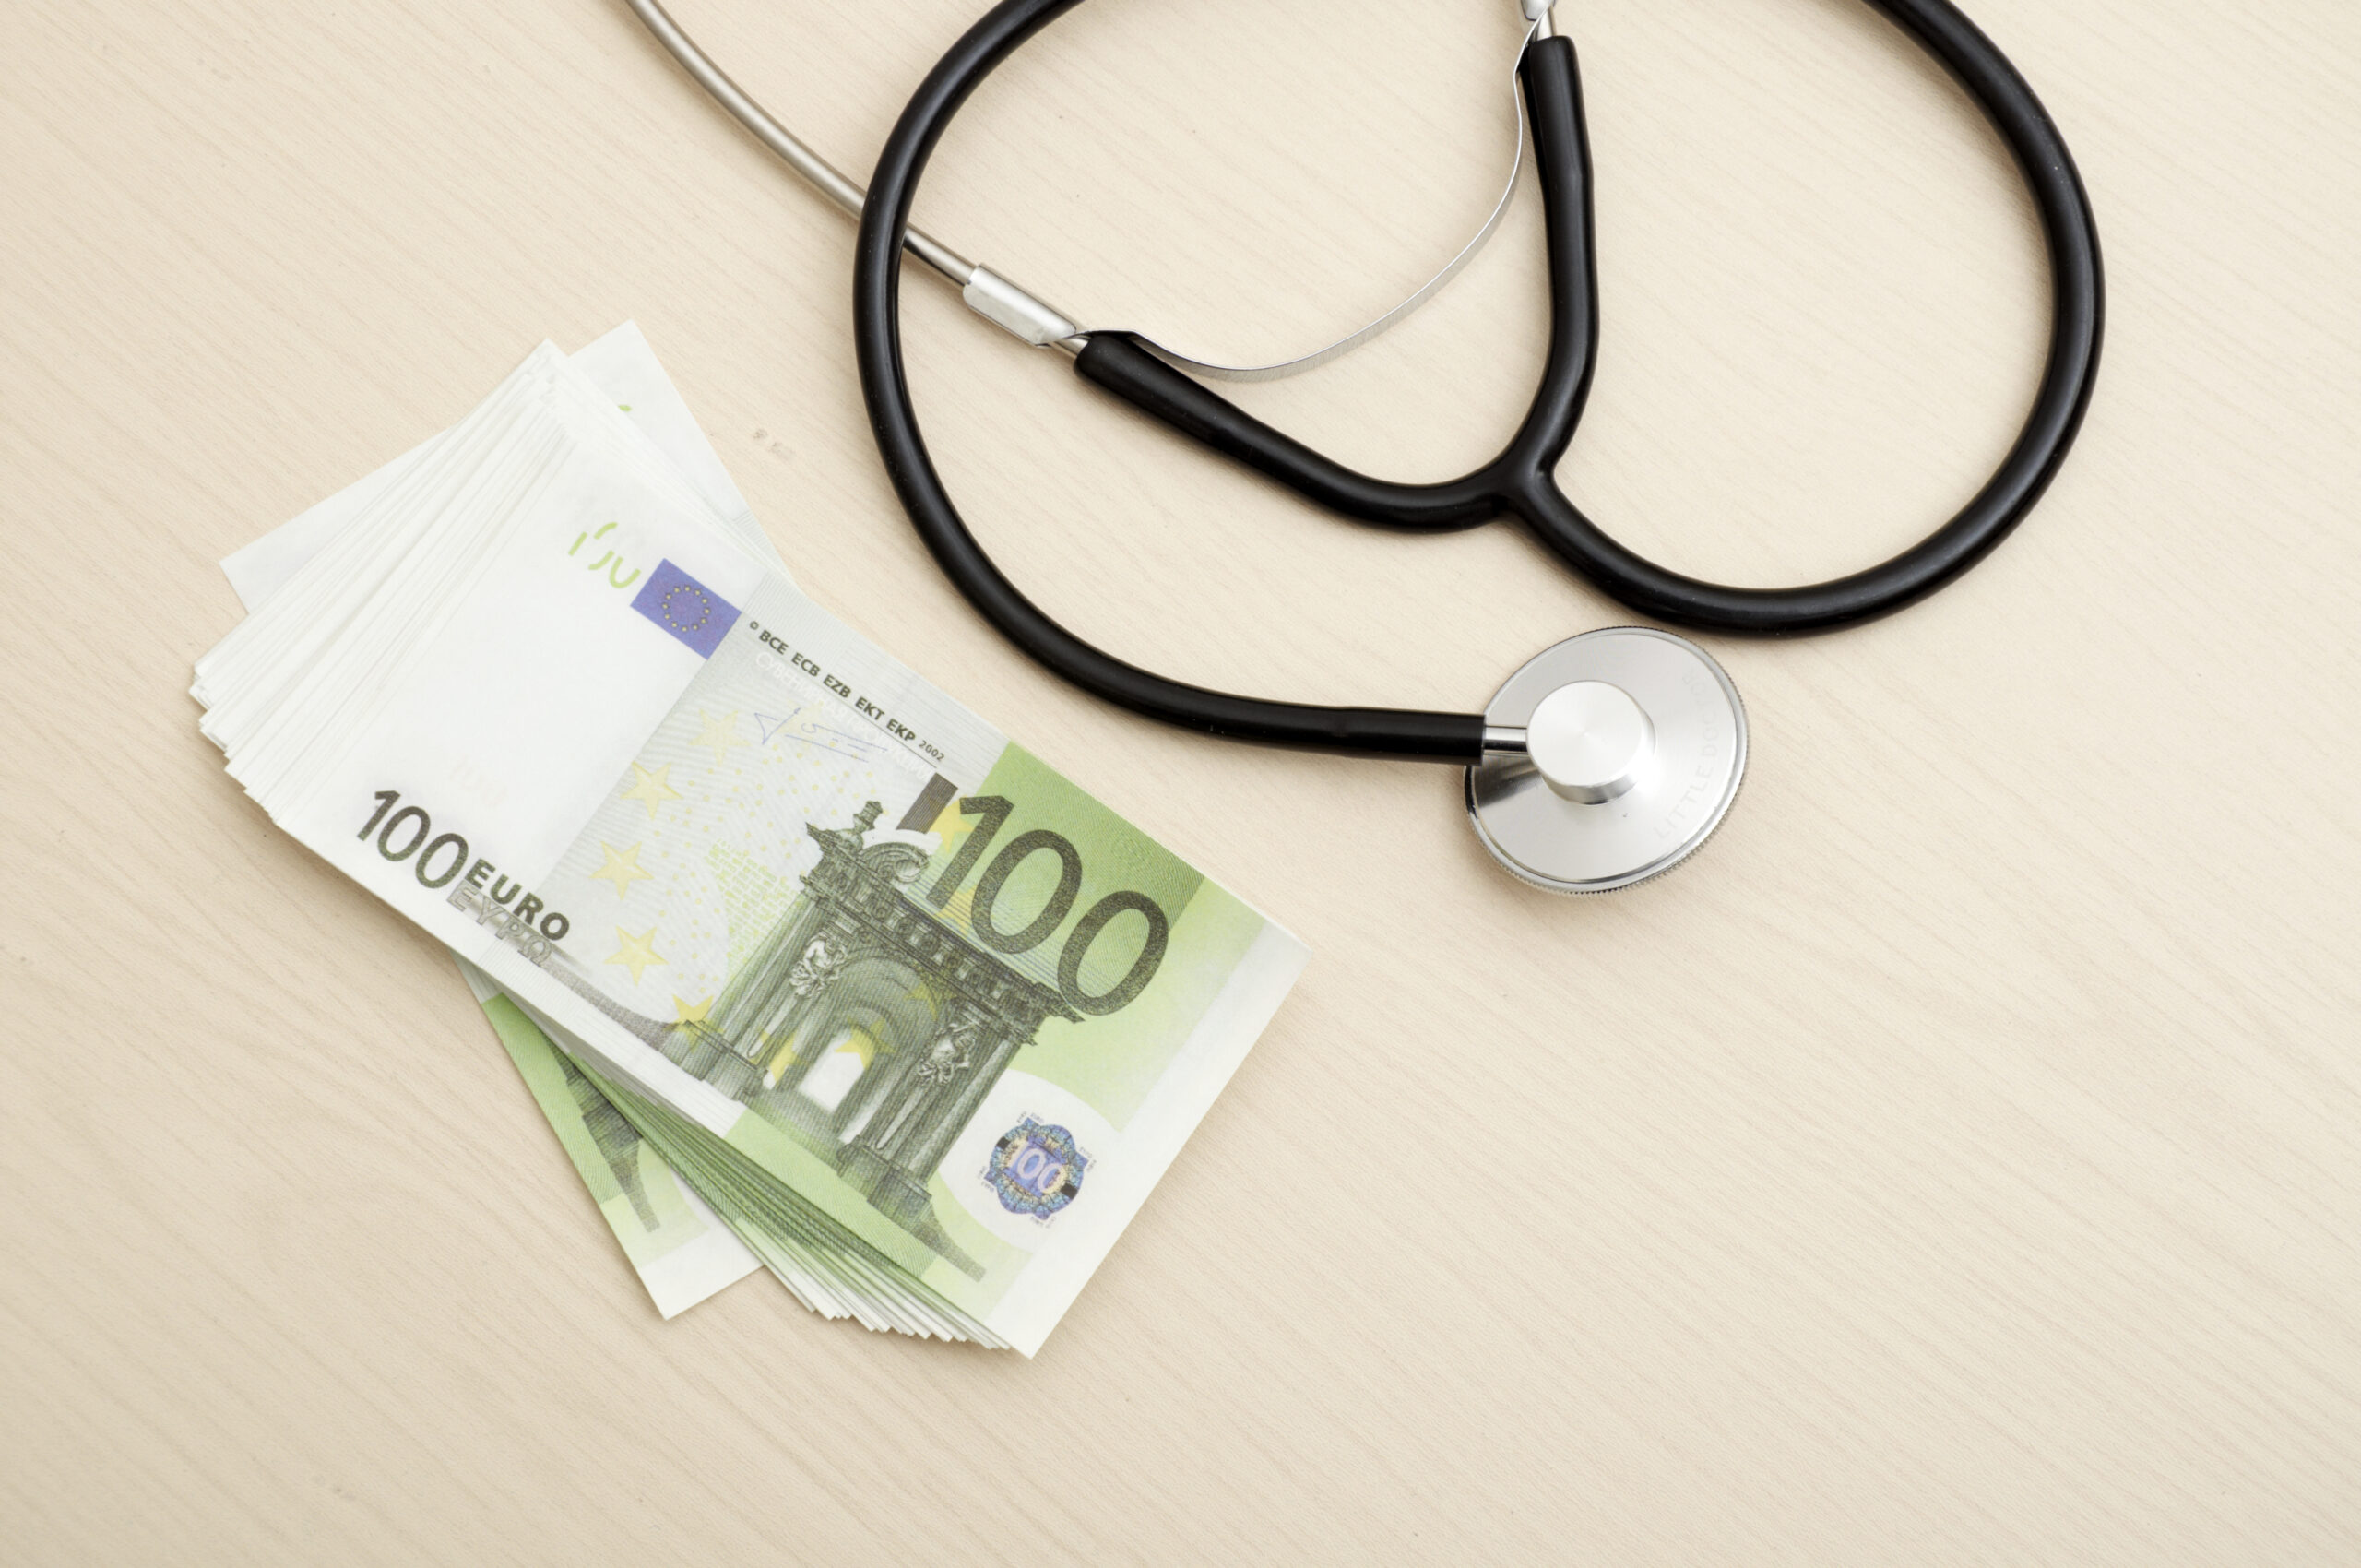 Stethoscope and cash (Euro)